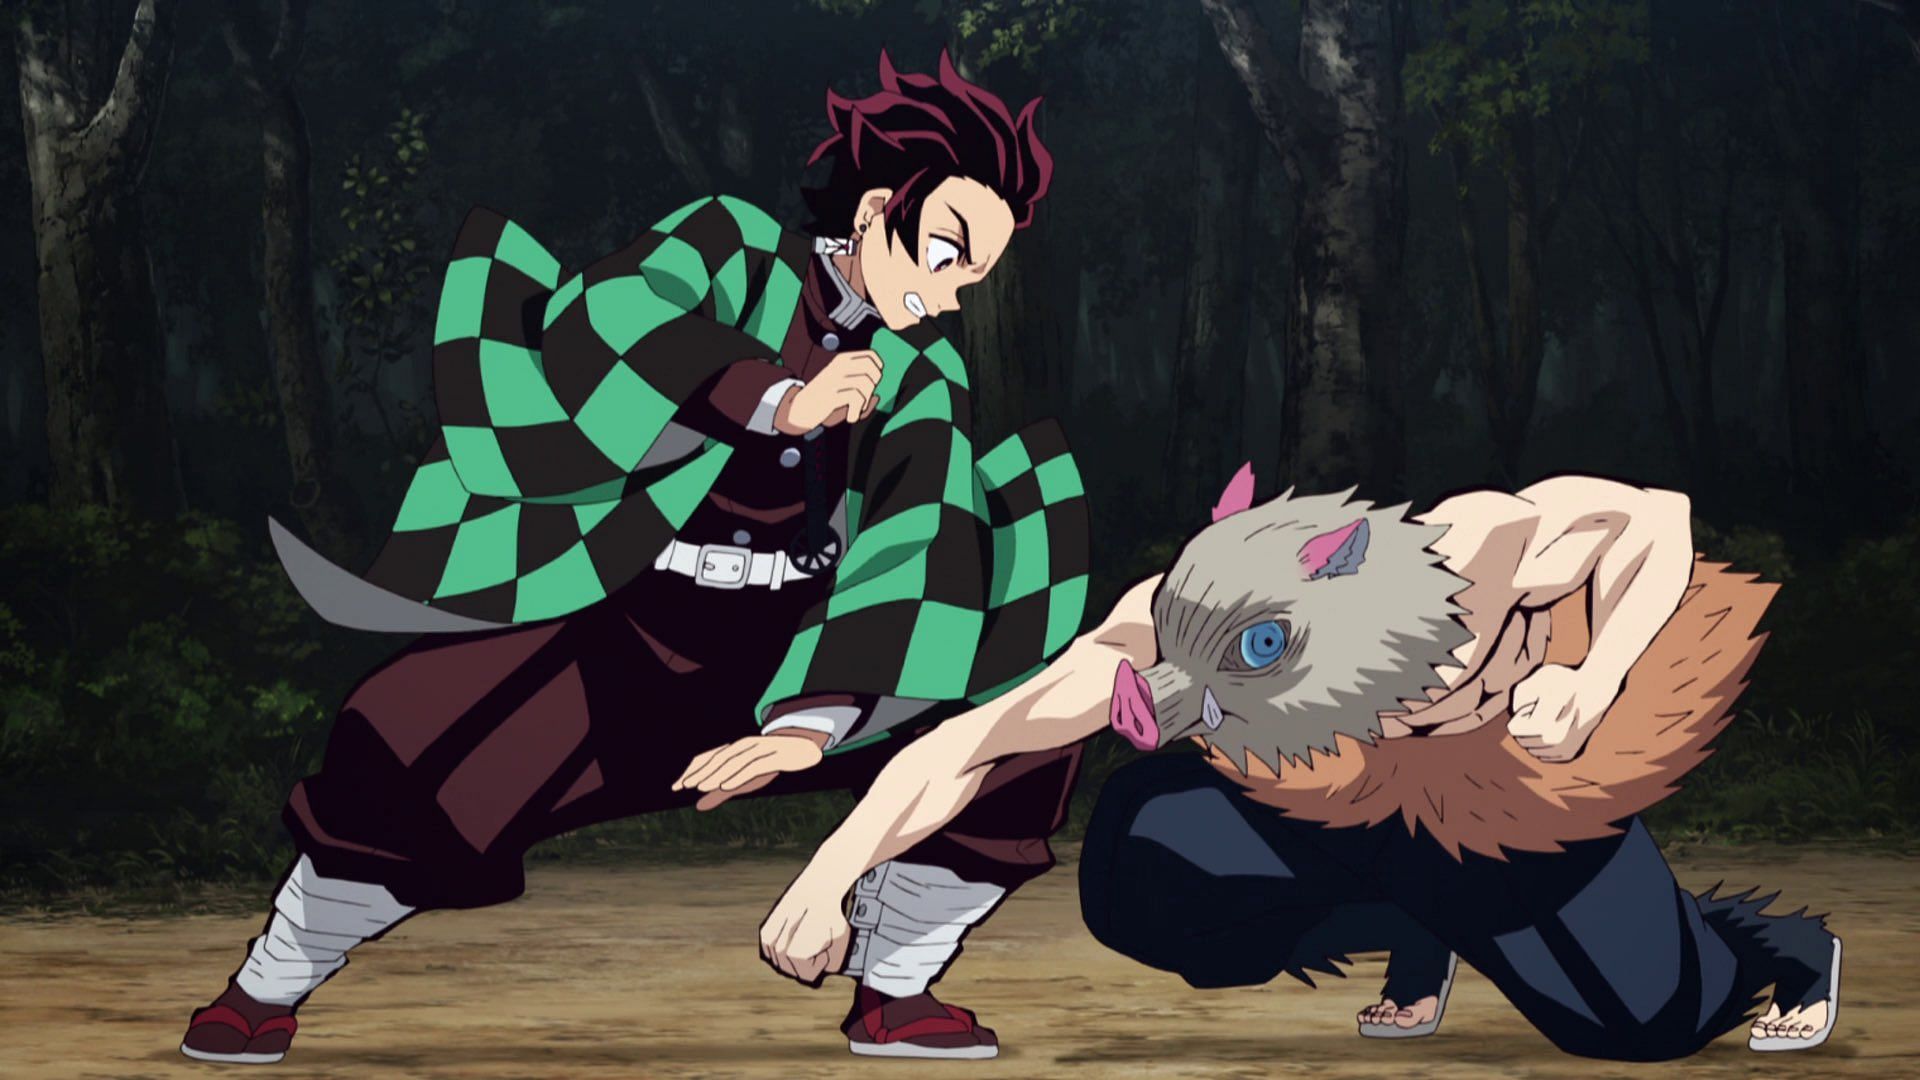 Tanjiro (left) and Inosuke (right) as seen in the Demon Slayer anime (Image via Ufotable Studios)